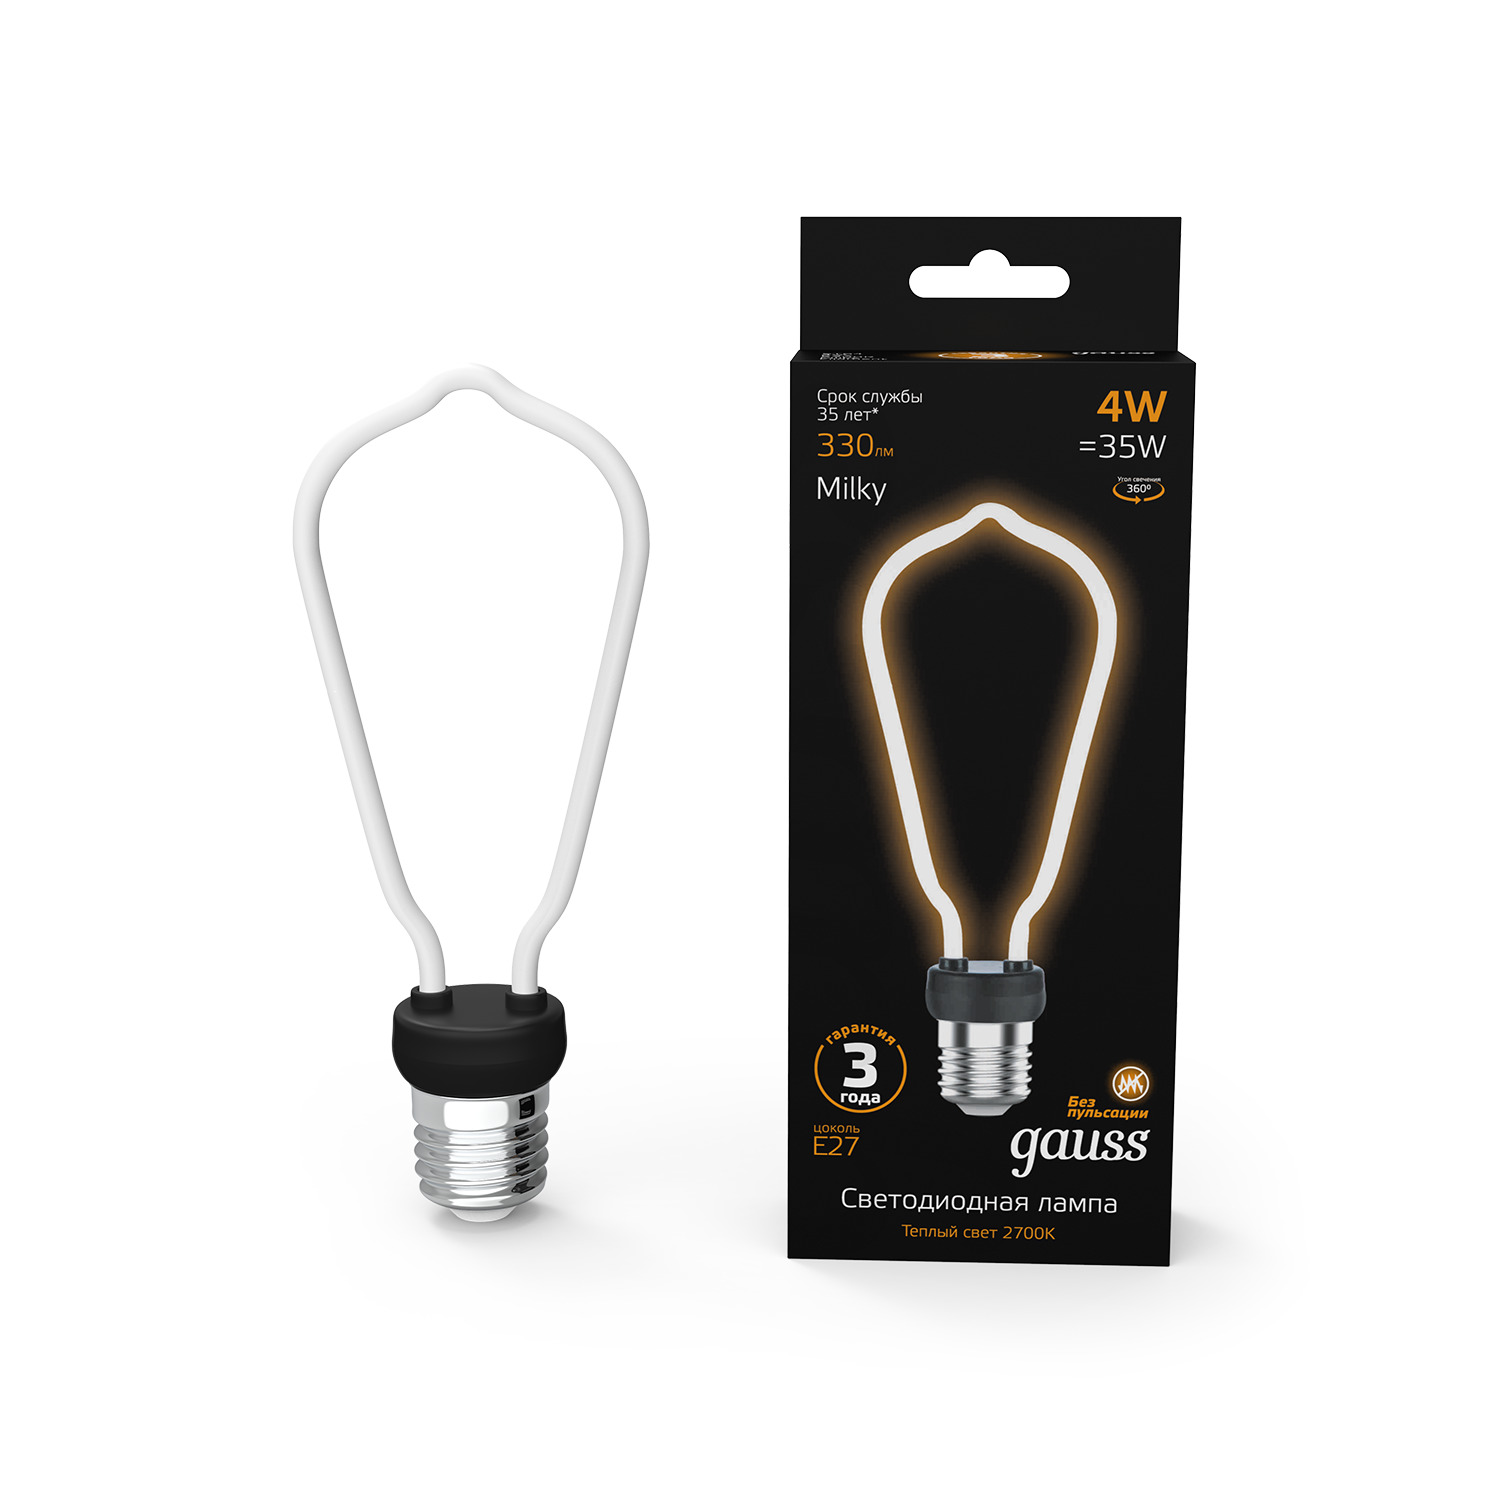 Лампа Gauss LED Filament Bulbless ST64 Milky E27 4W 330 Лм 2700K 64x165мм